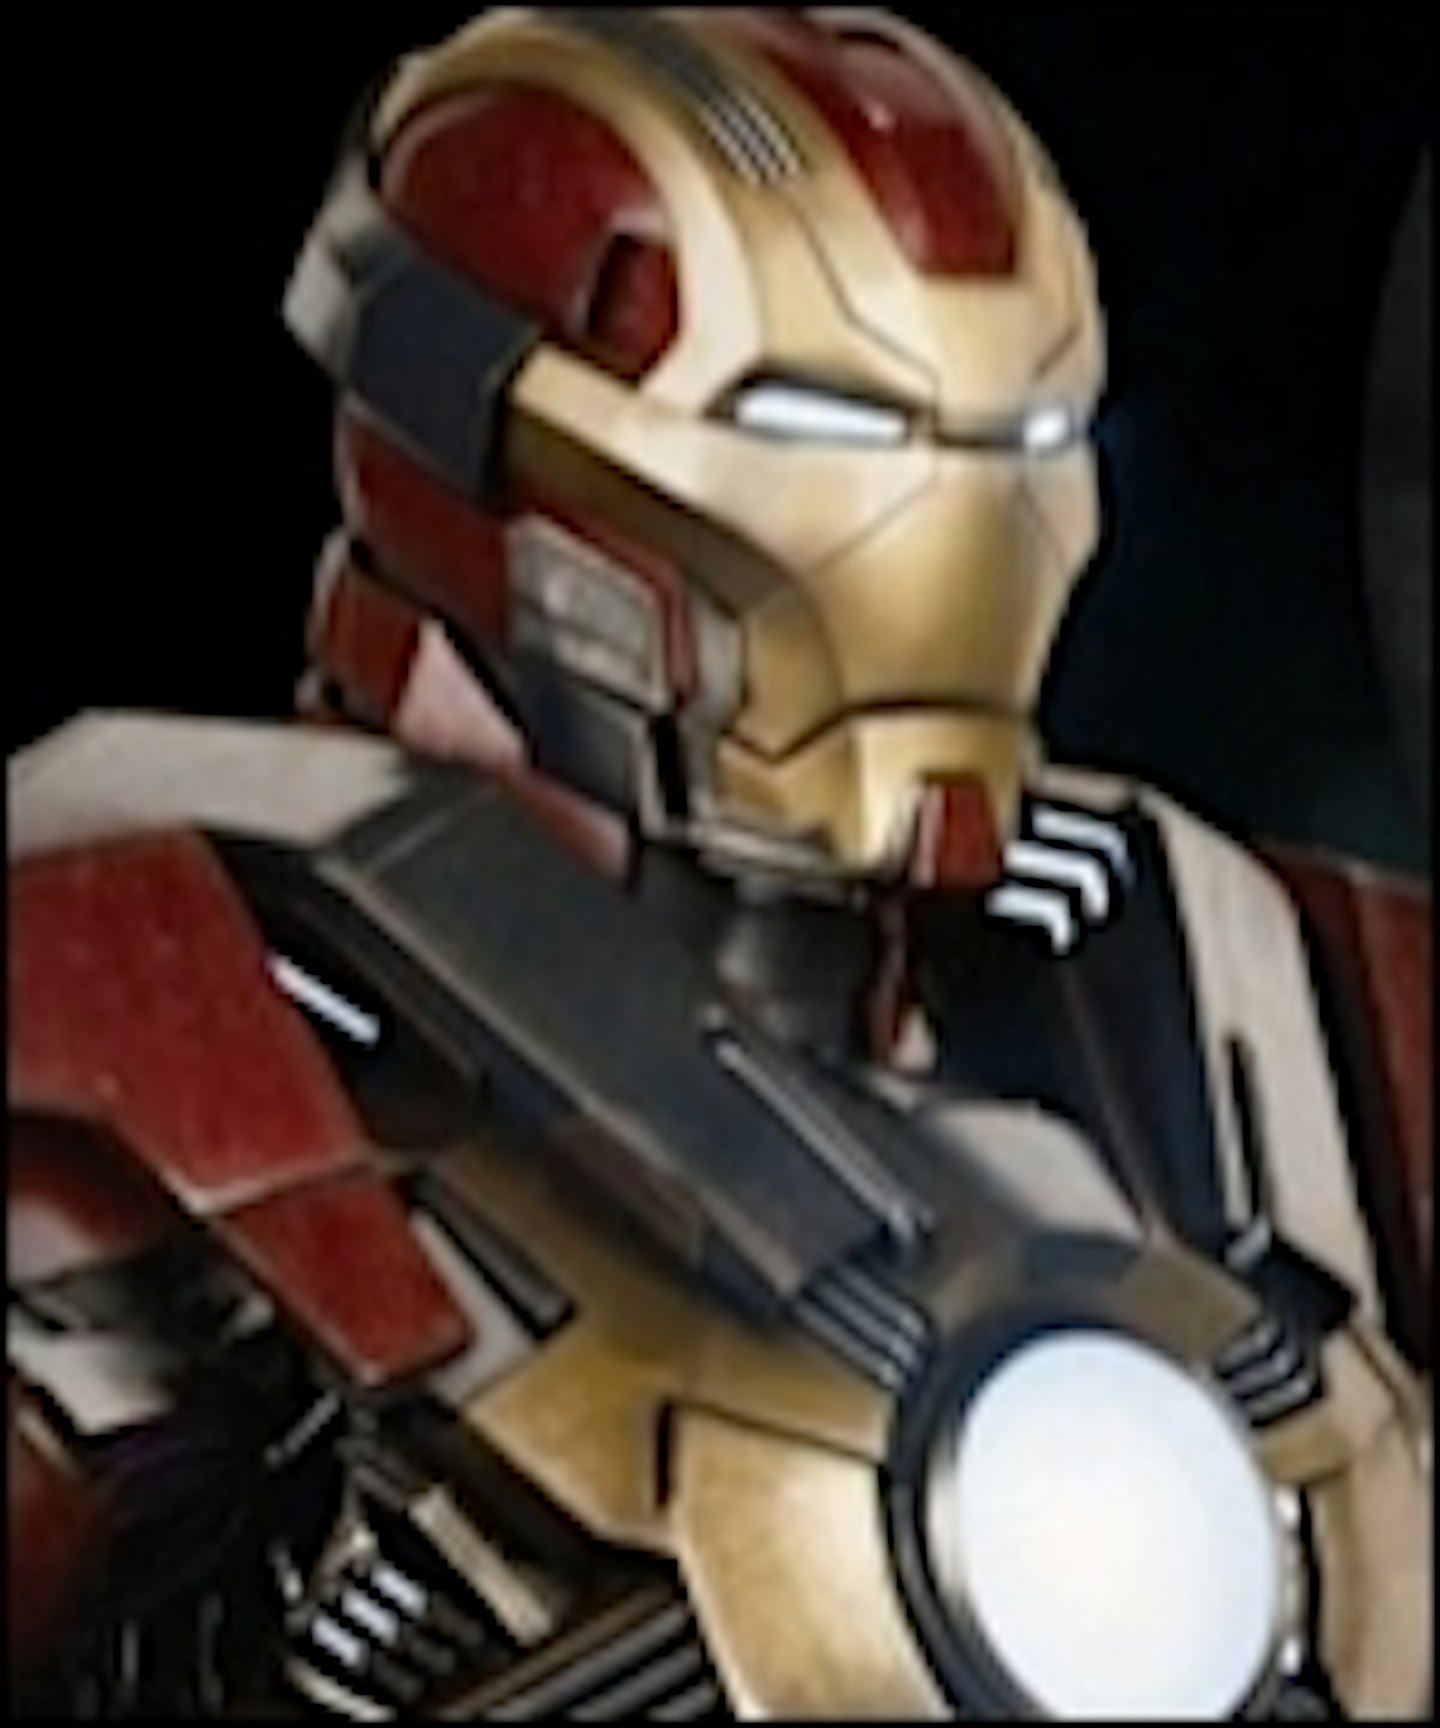 iron man 3 suit